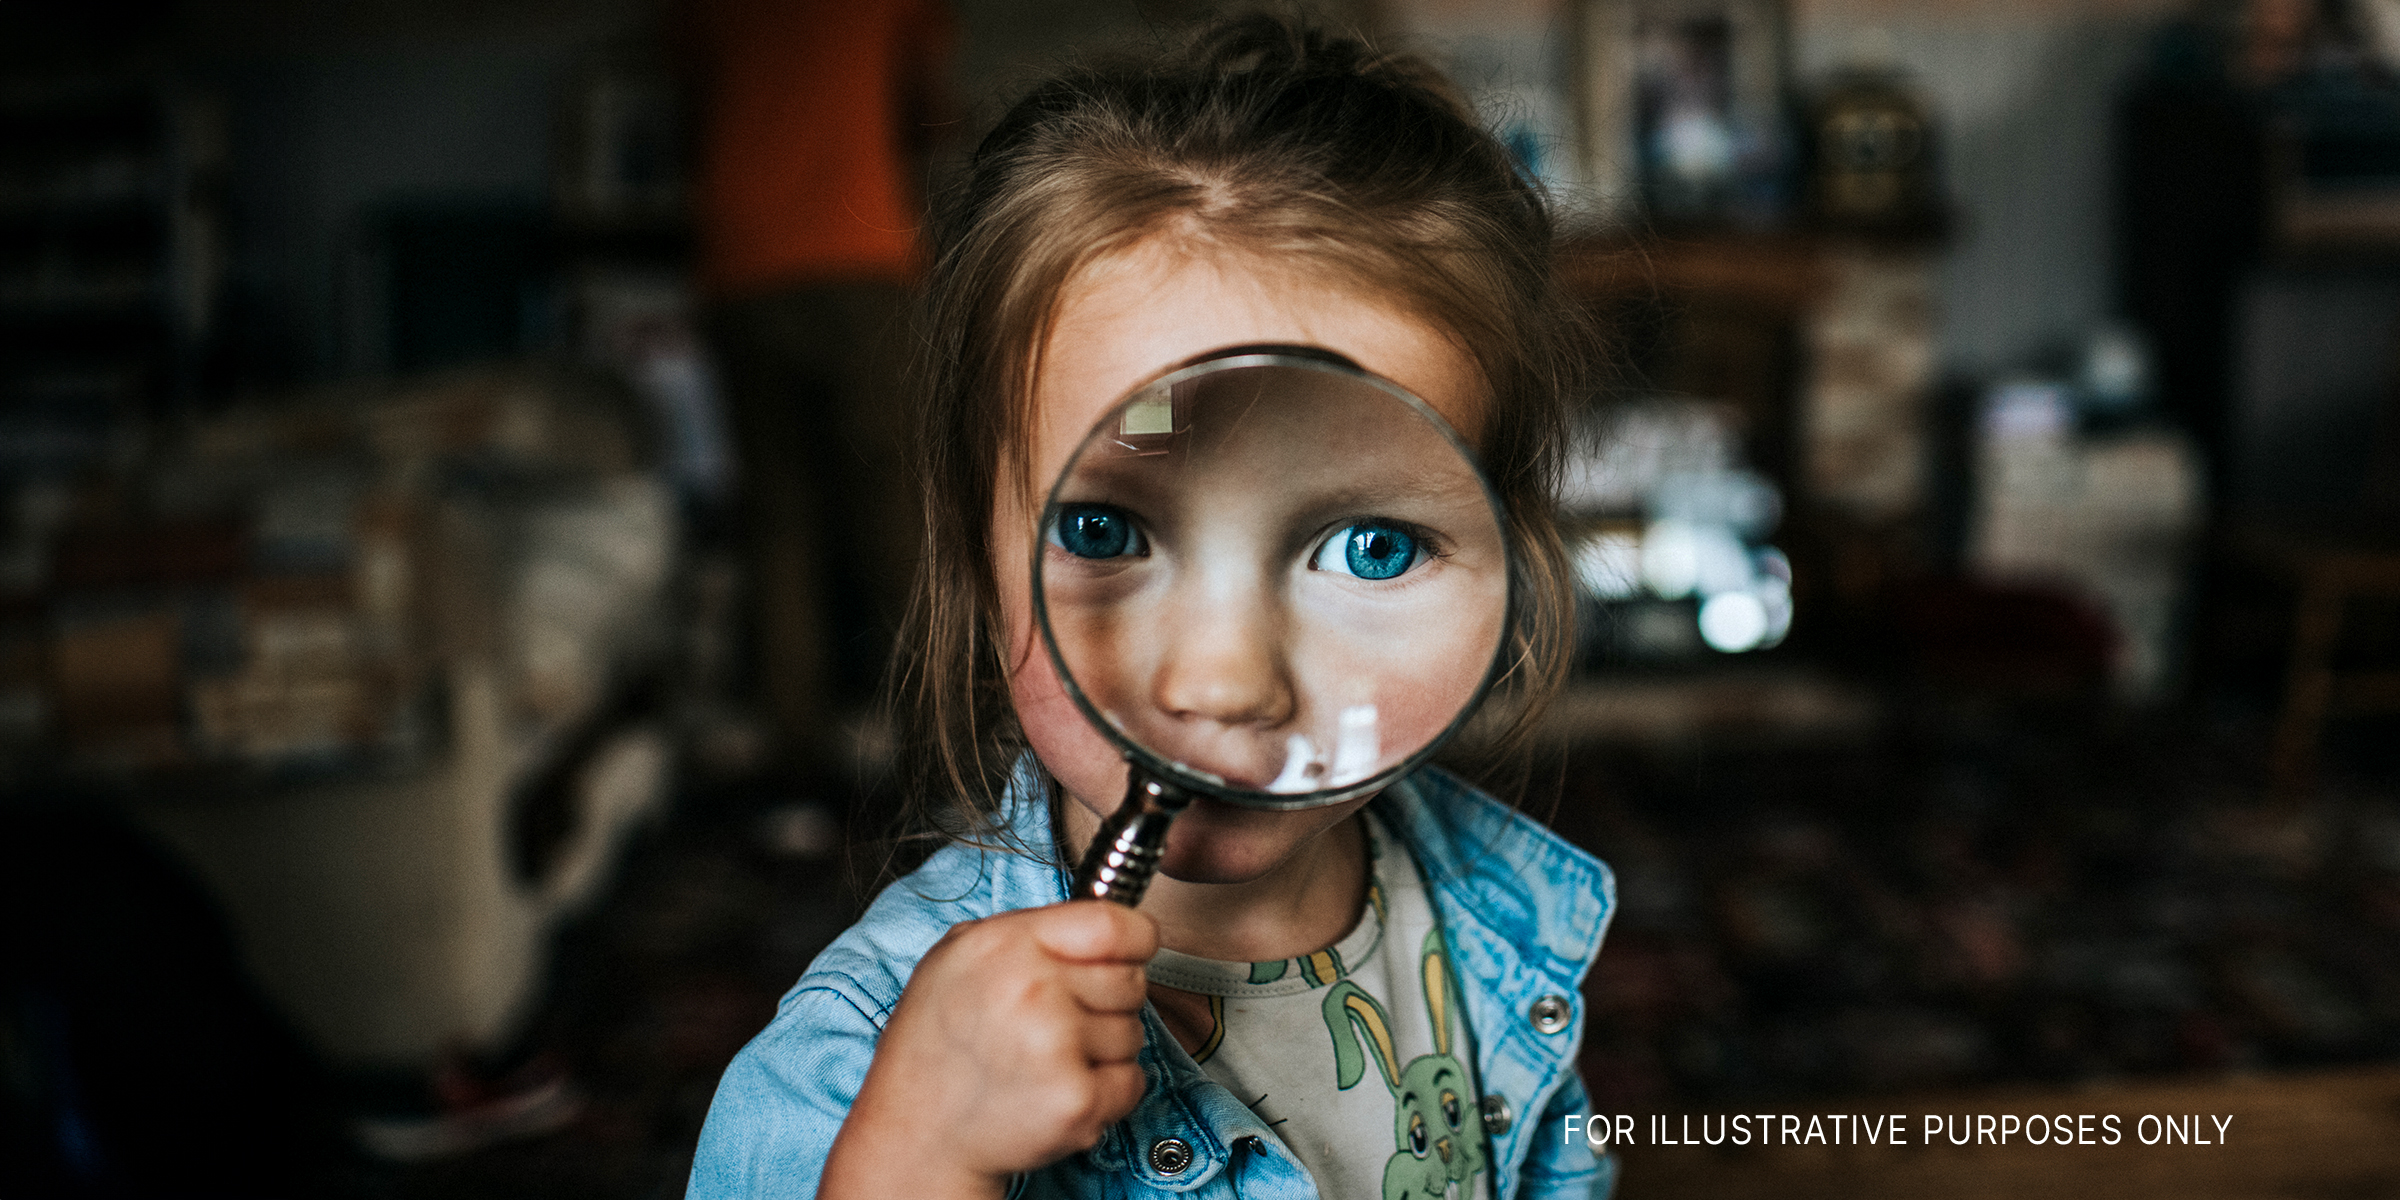 A little girl holding a microscope | Source: Shutterstock